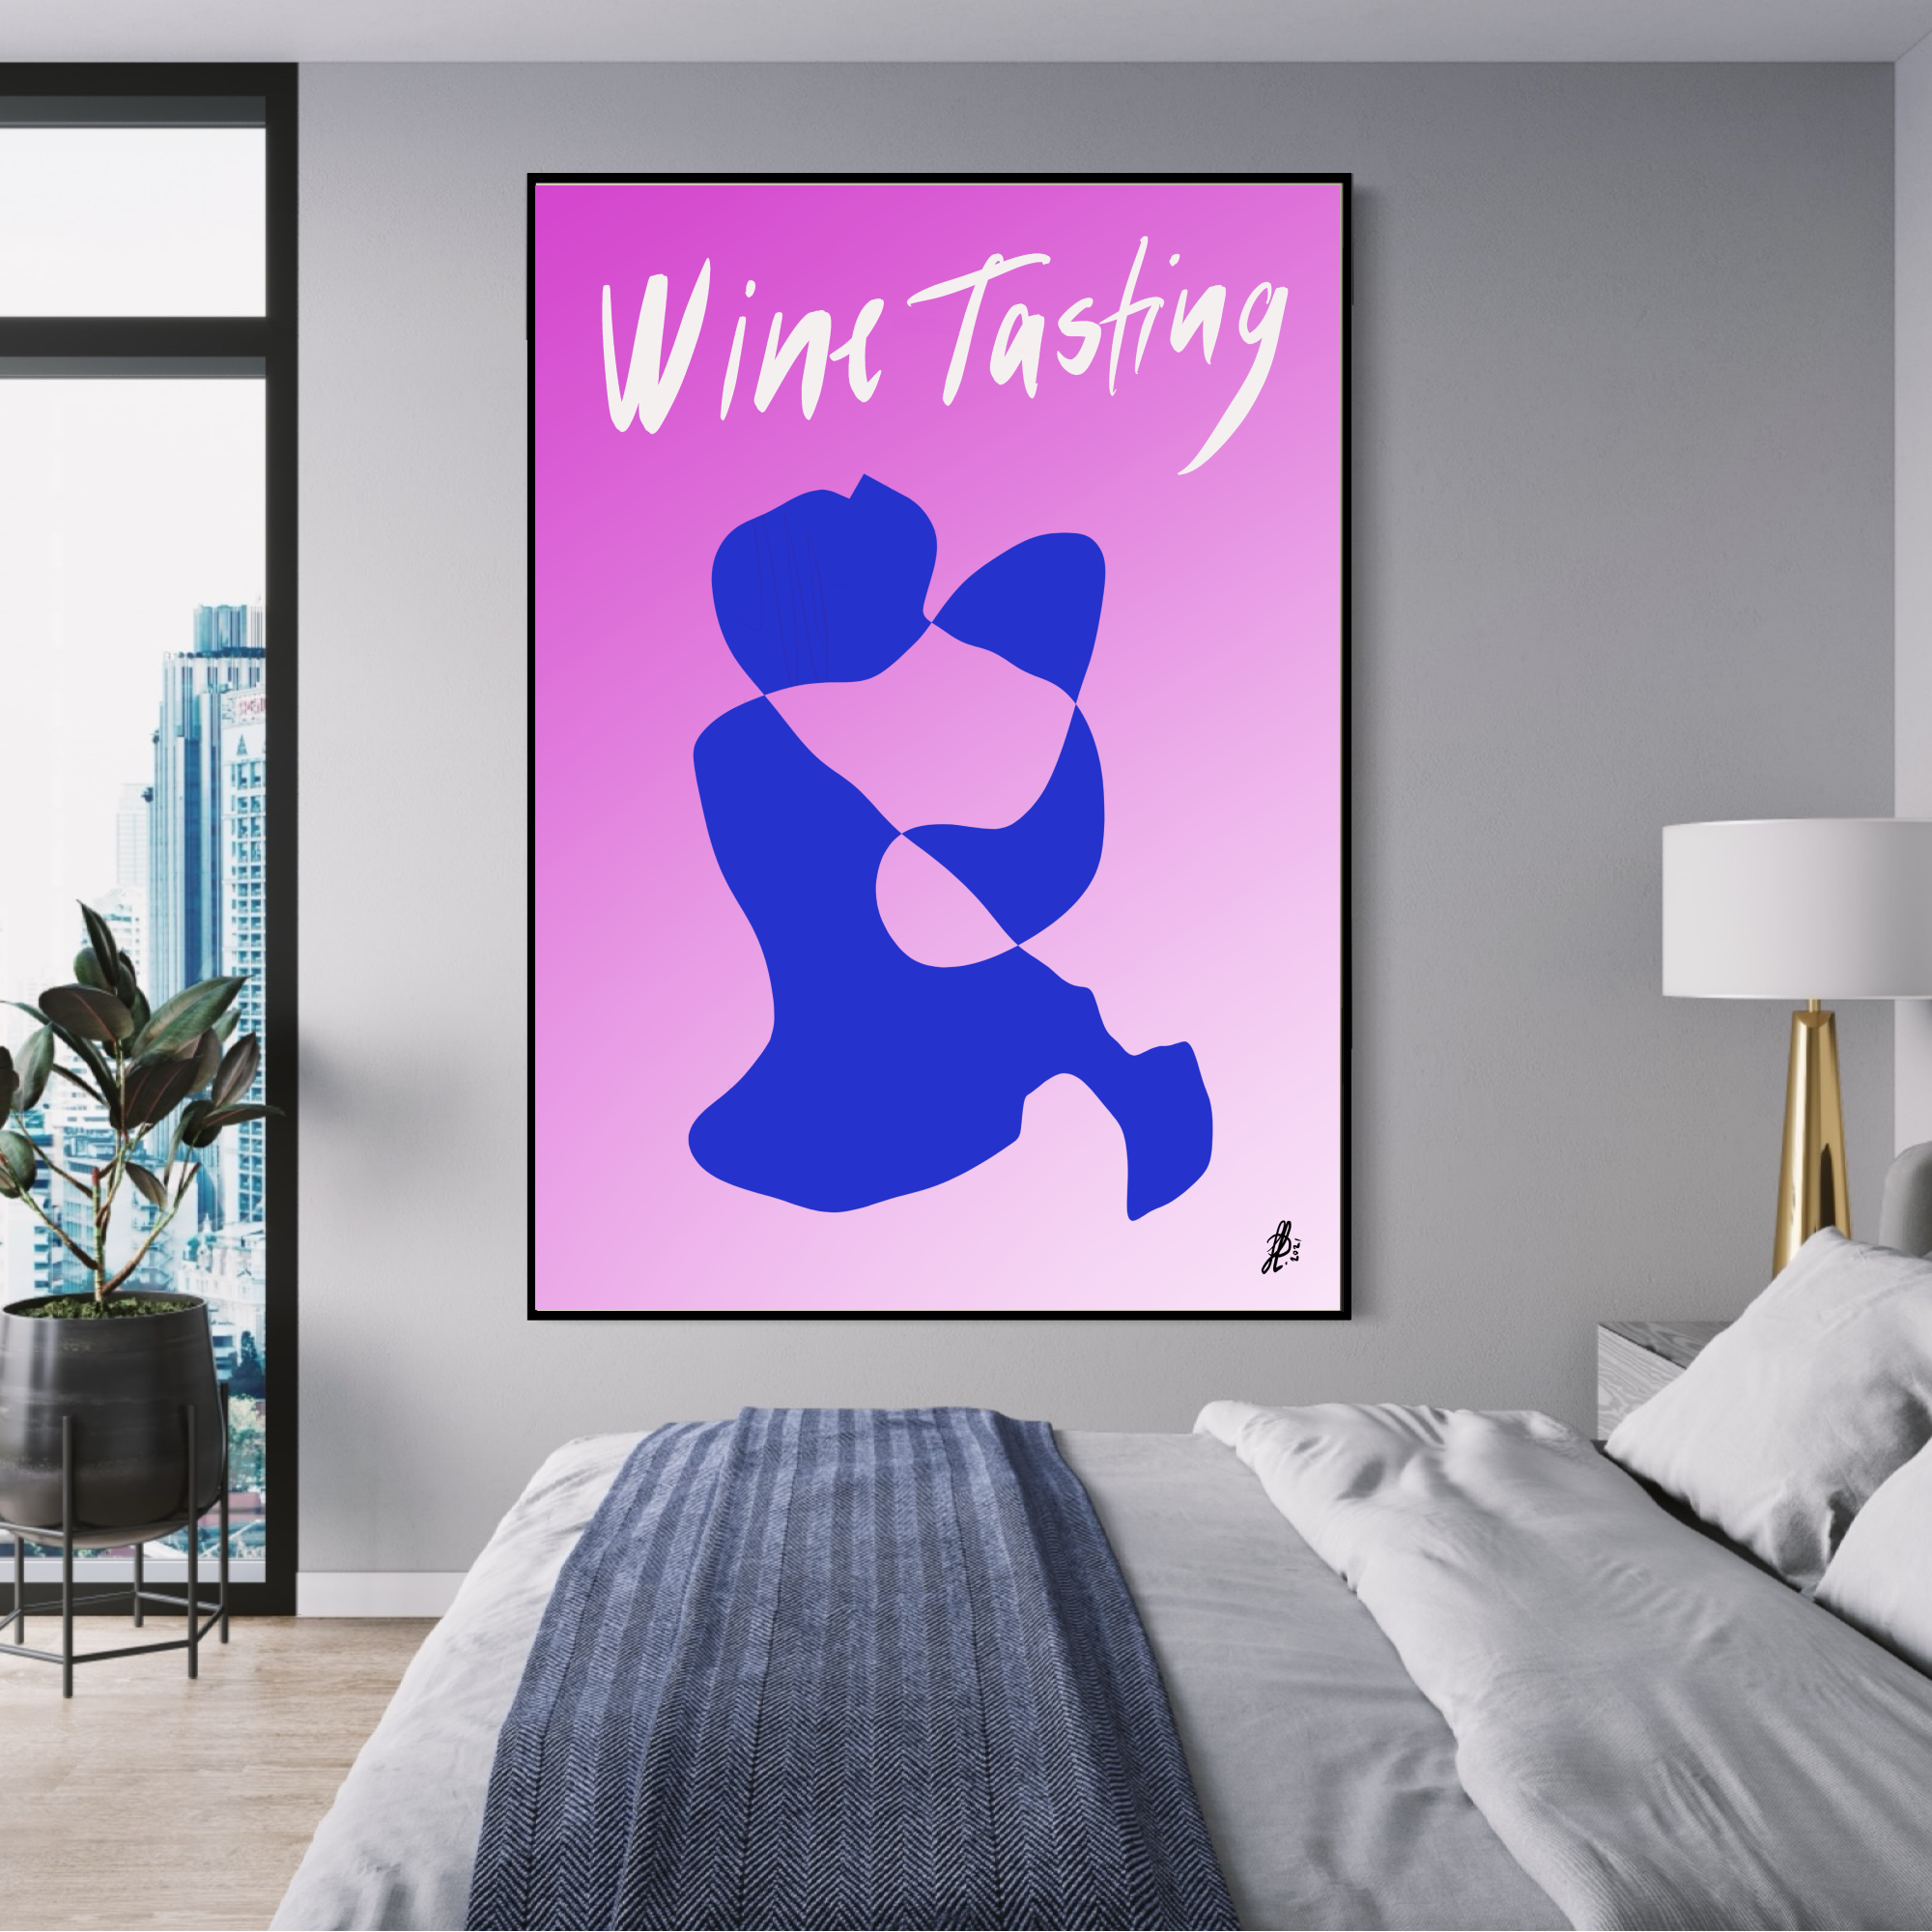 Poster: "Wine Tasting #2"